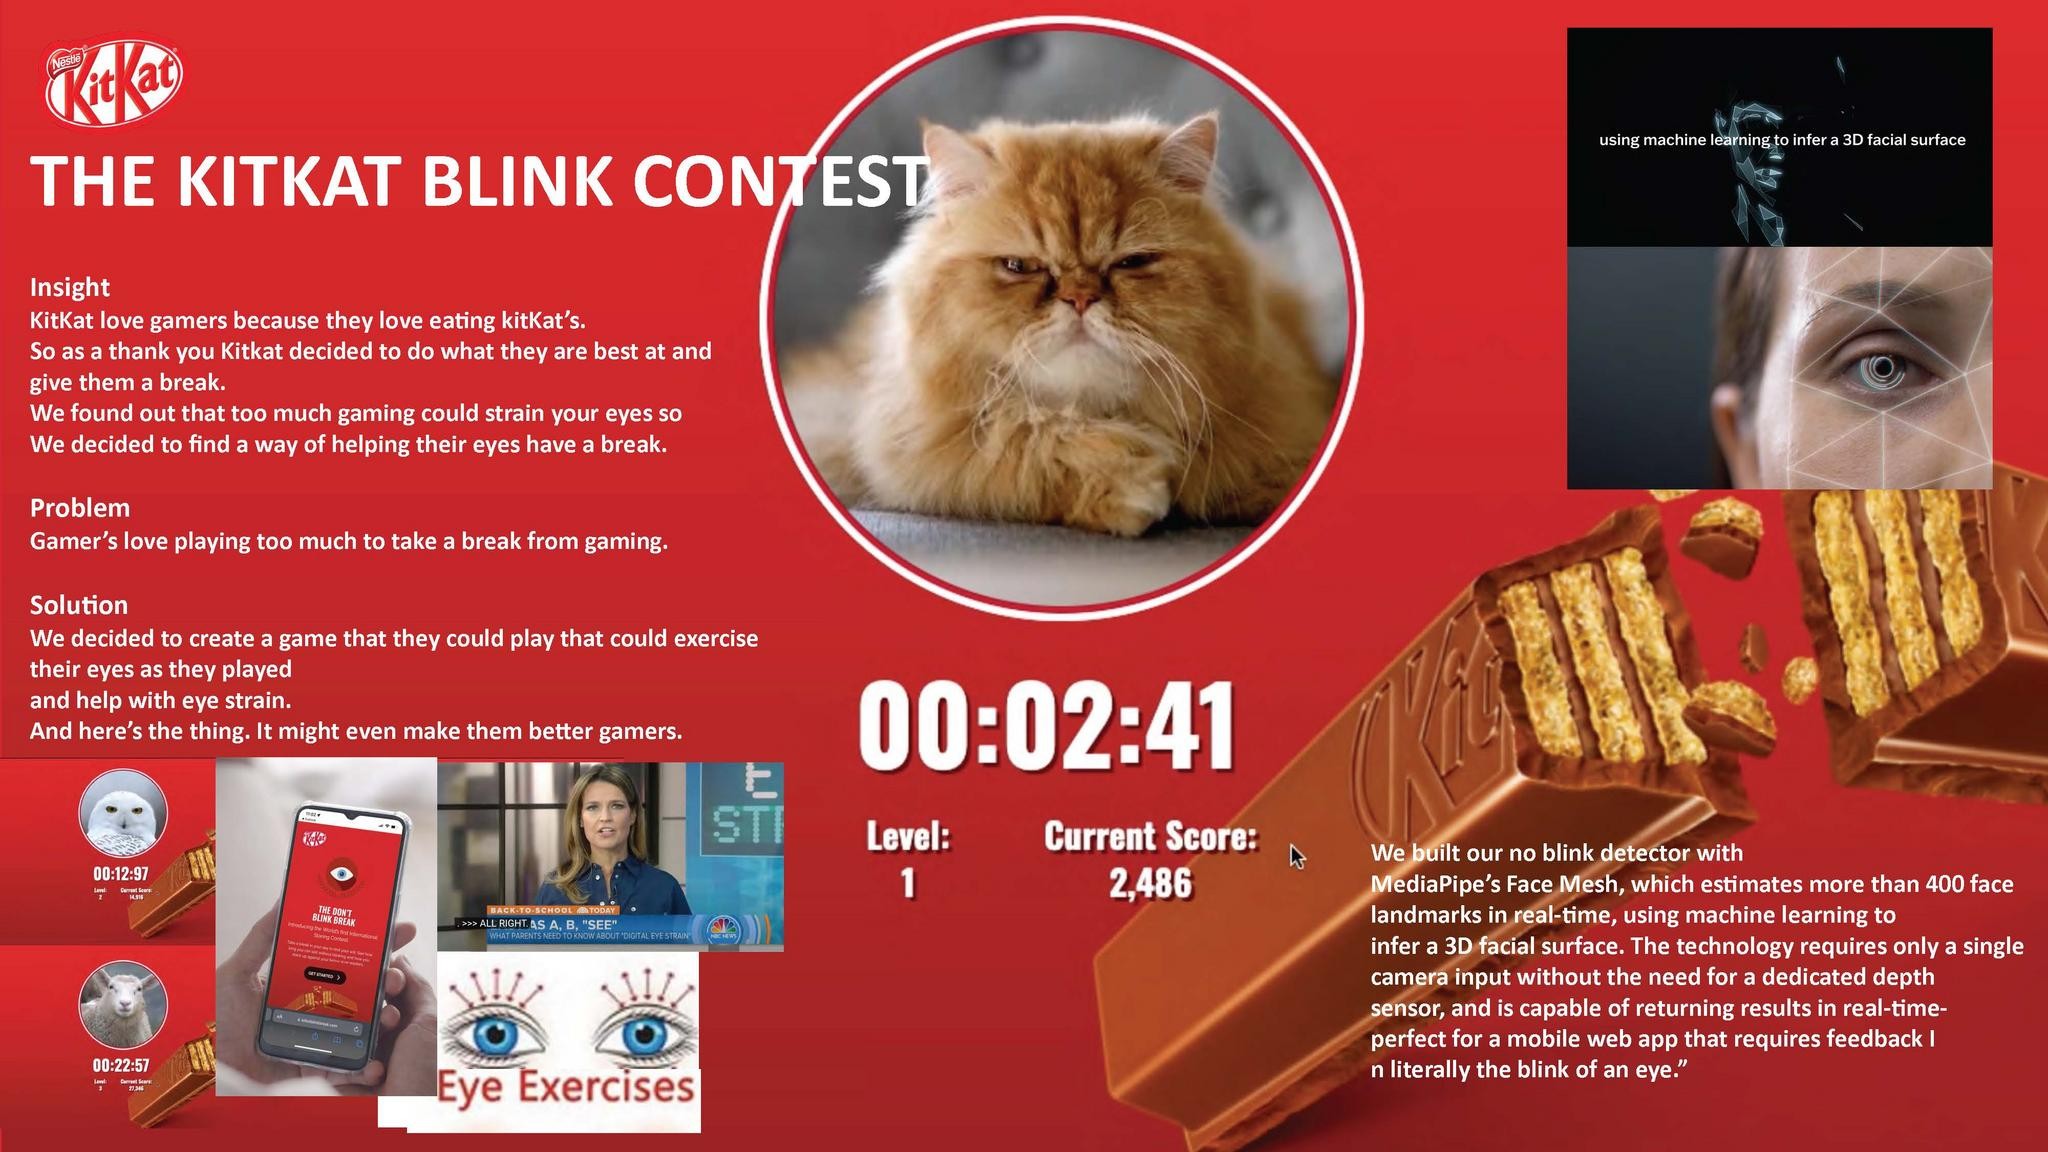 The KitKat Blink contest